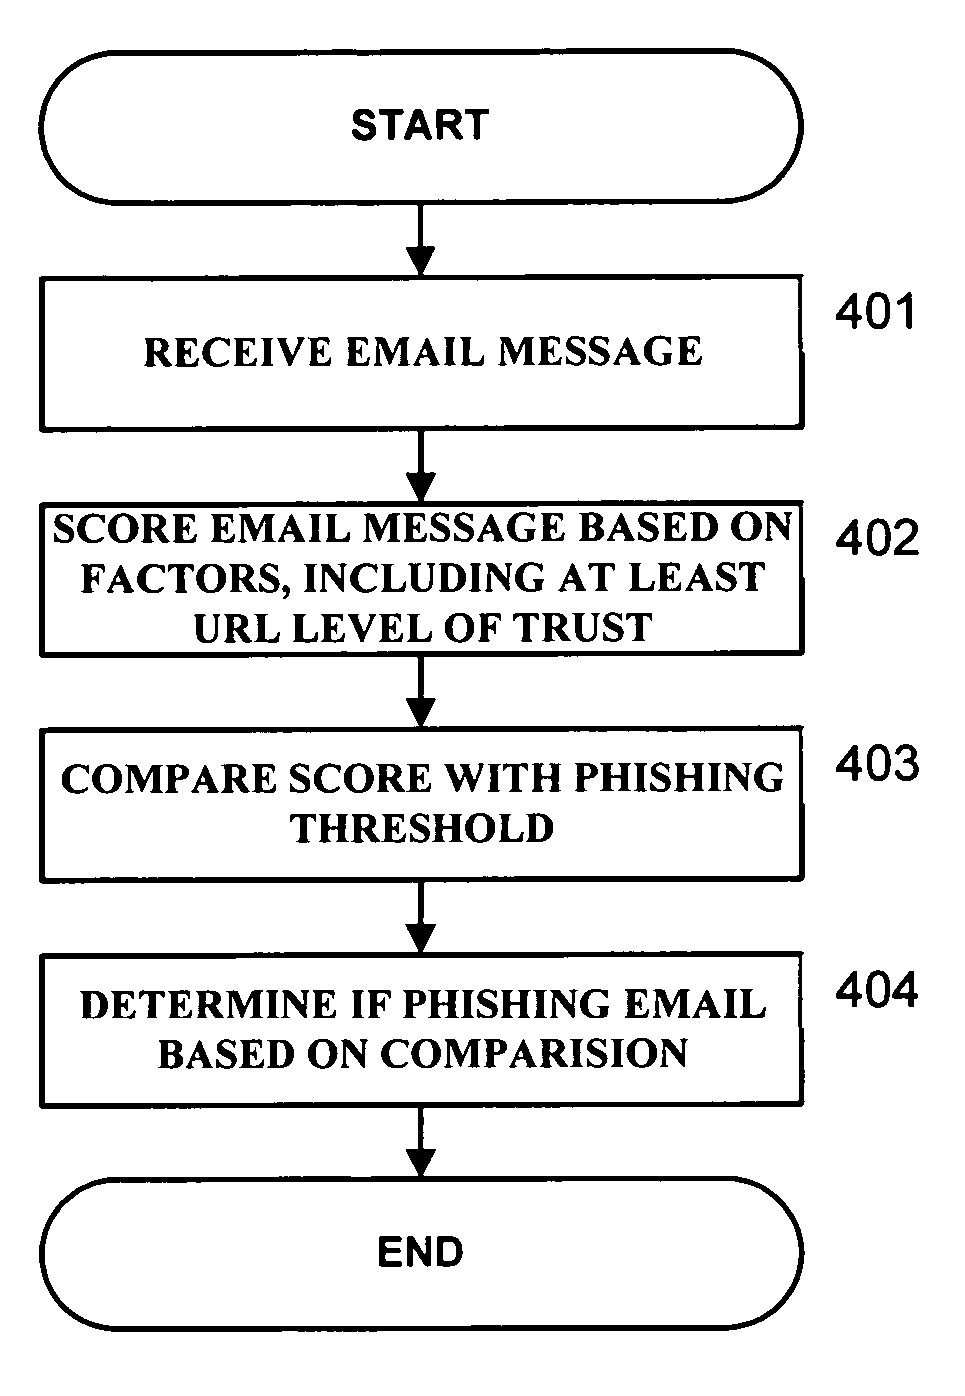 Email anti-phishing inspector